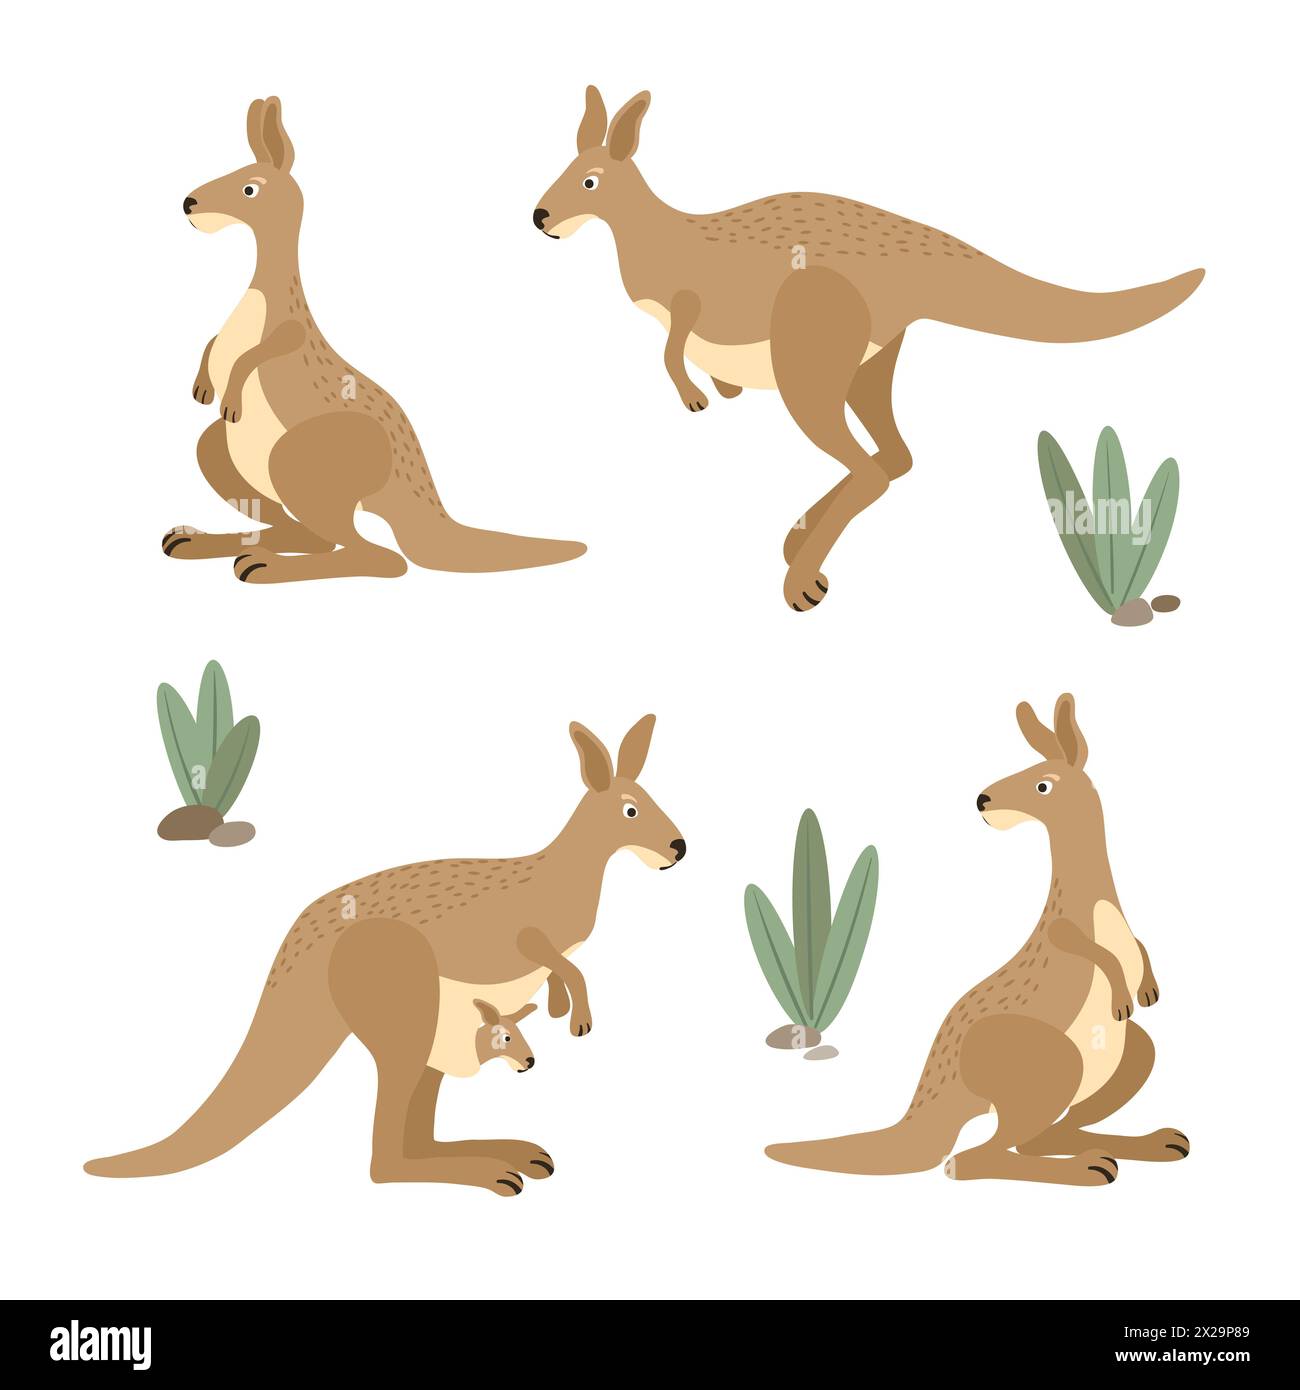 Süßes Känguru-Set. Australische Tierfigurenkollektion. Vektorillustration von Kängurus in verschiedenen Posen Stock Vektor